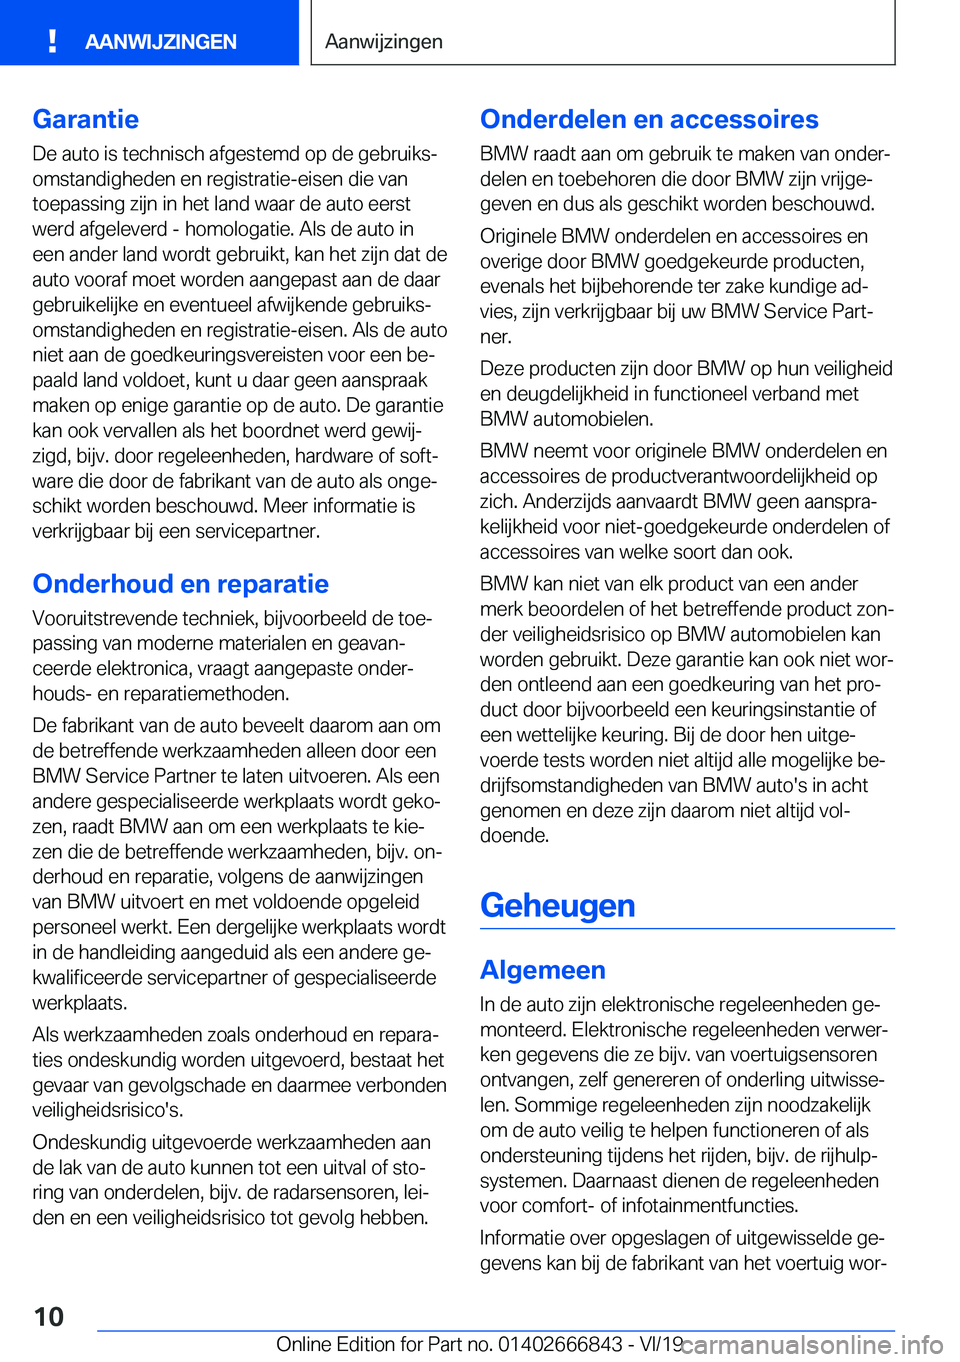 BMW X3 M 2020  Instructieboekjes (in Dutch) �G�a�r�a�n�t�i�e�D�e��a�u�t�o��i�s��t�e�c�h�n�i�s�c�h��a�f�g�e�s�t�e�m�d��o�p��d�e��g�e�b�r�u�i�k�sj
�o�m�s�t�a�n�d�i�g�h�e�d�e�n��e�n��r�e�g�i�s�t�r�a�t�i�e�-�e�i�s�e�n��d�i�e��v�a�n �t�o